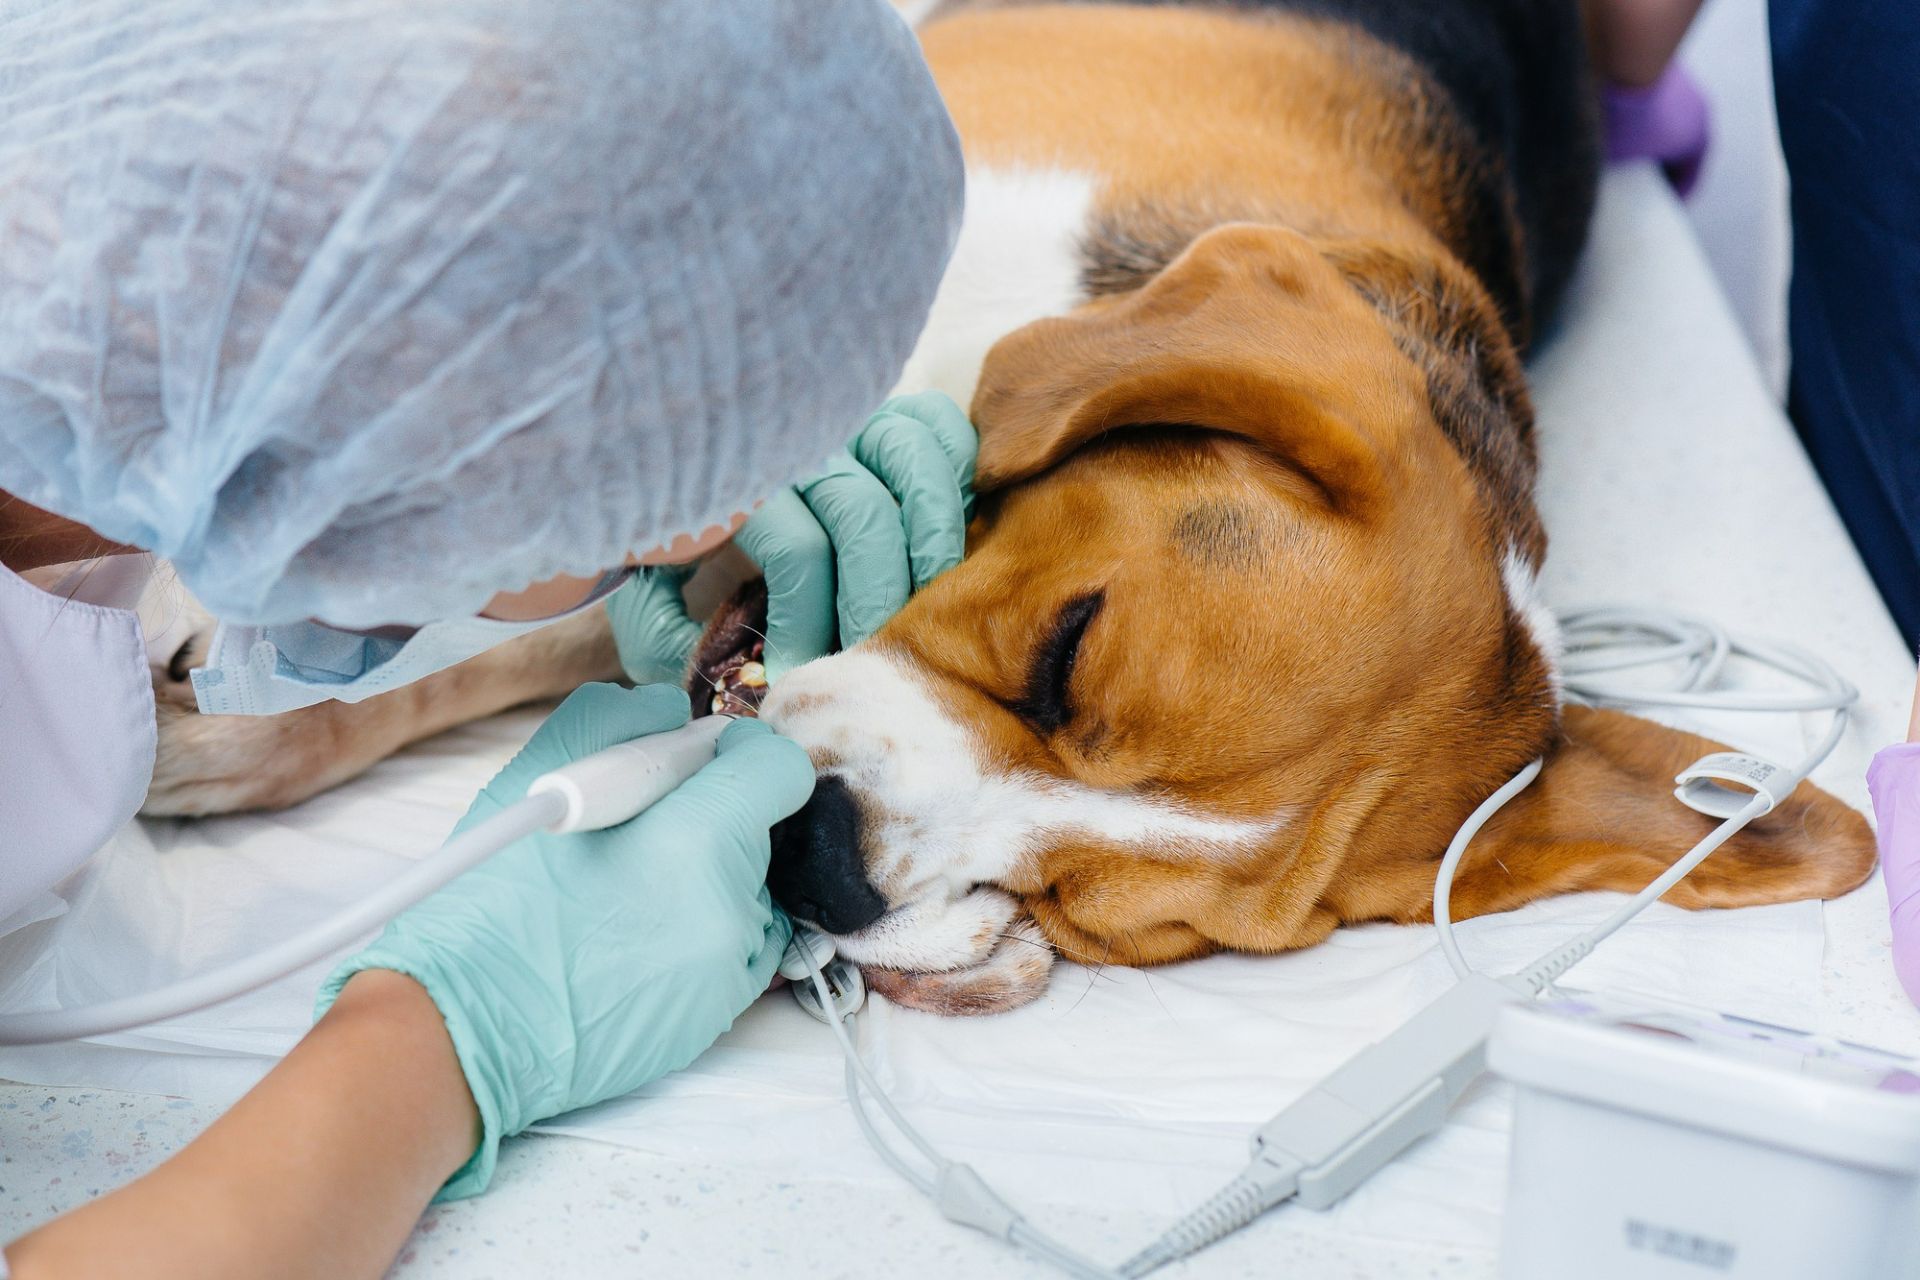 dental procedures in a modern veterinary clinic